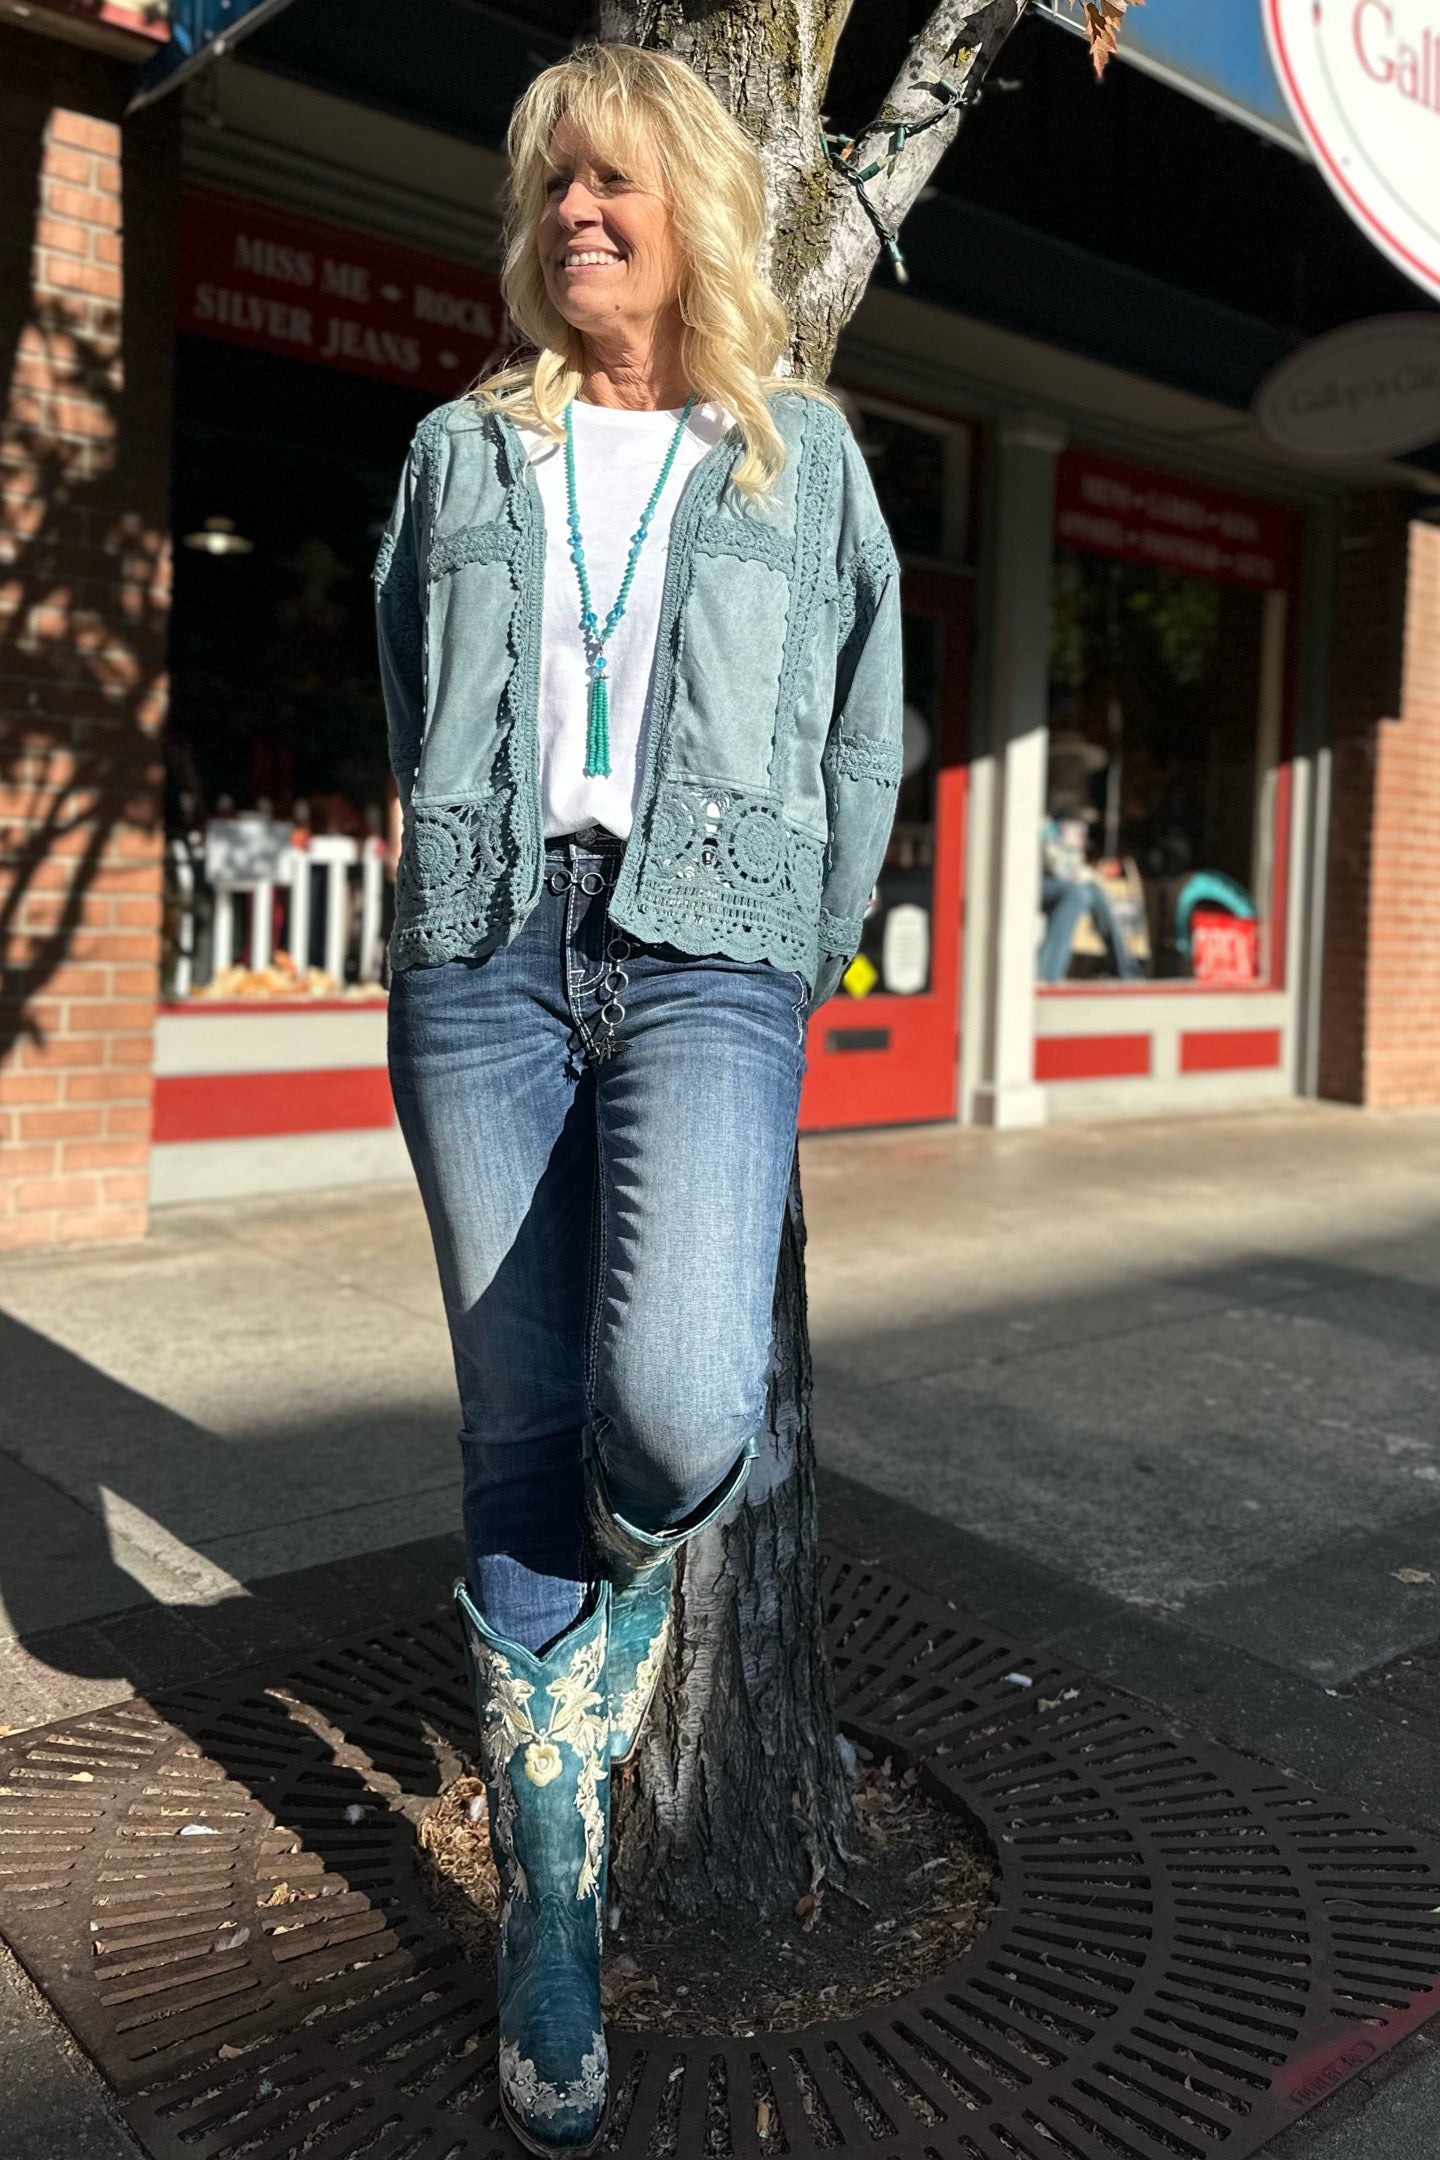 Miss Me "Jaded" Soft Faux Suede Jacket-Jacket-Gallop 'n Glitz-Gallop 'n Glitz- Women's Western Wear Boutique, Located in Grants Pass, Oregon